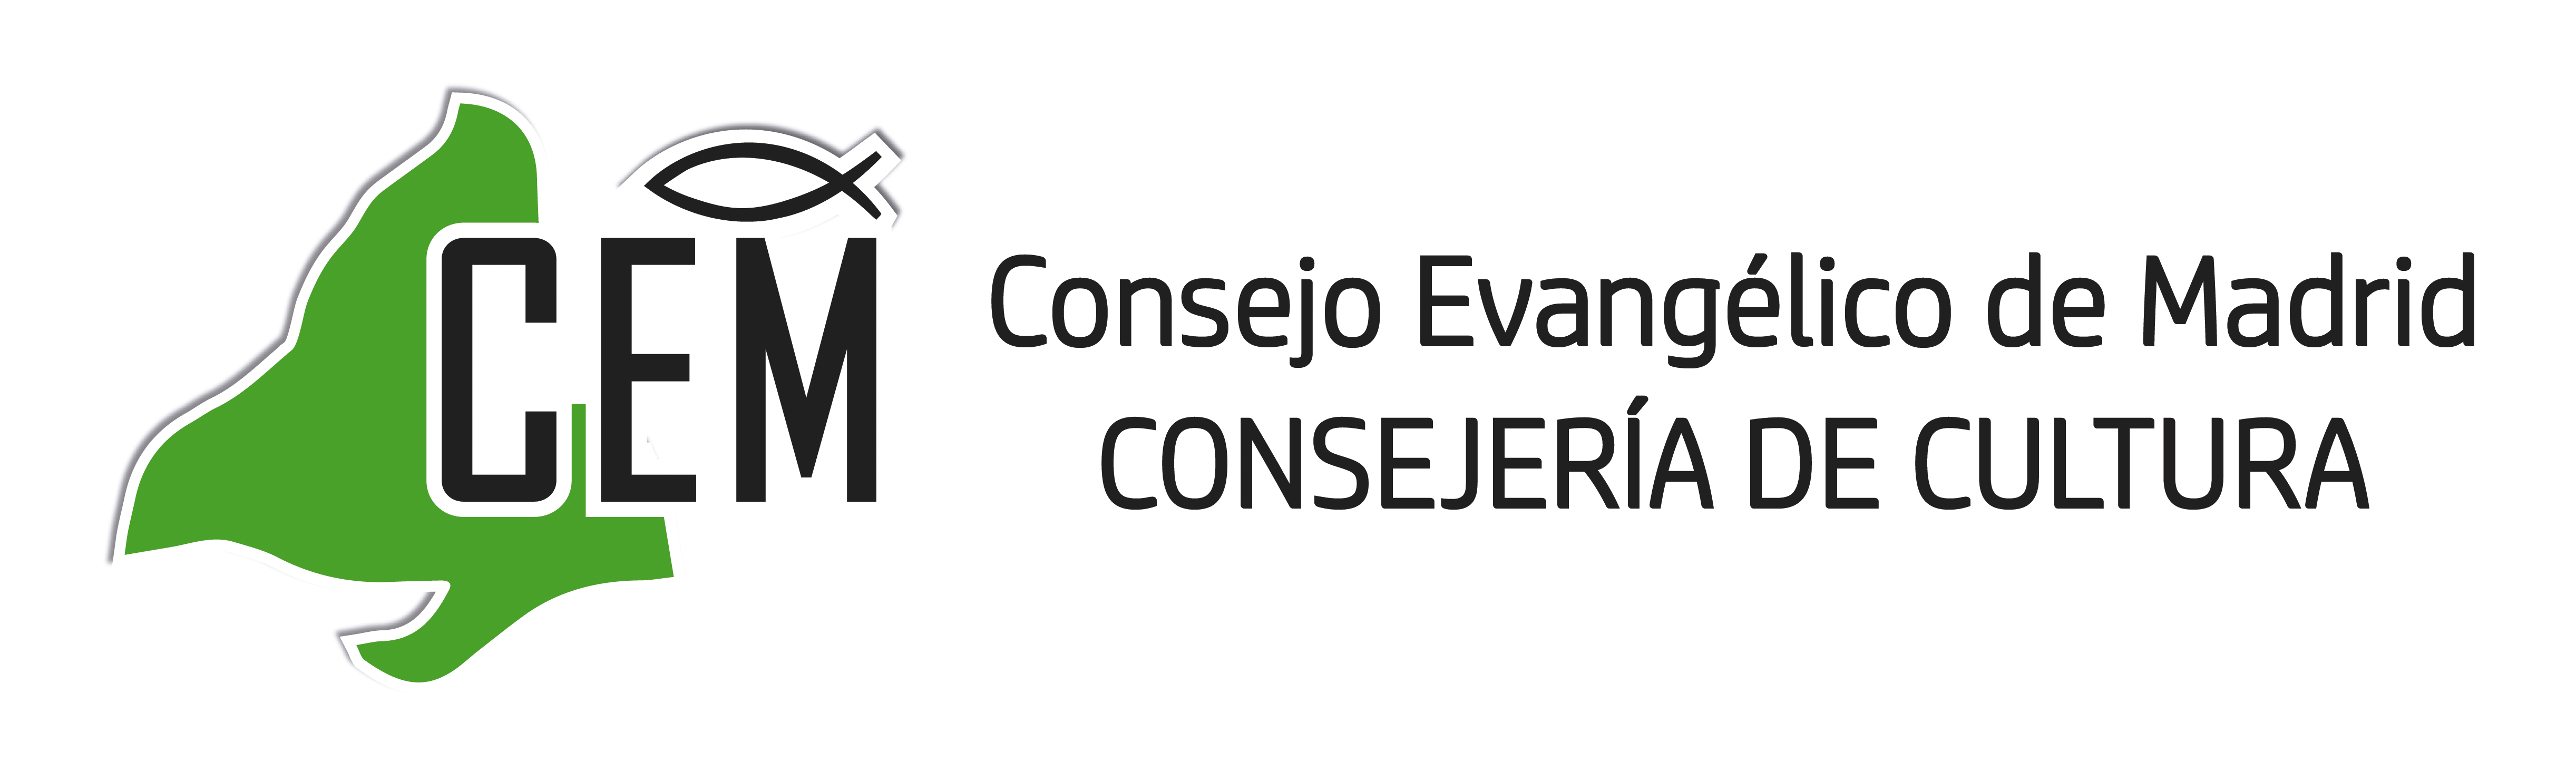 Consejo Evangélico de Madrid (CEM)